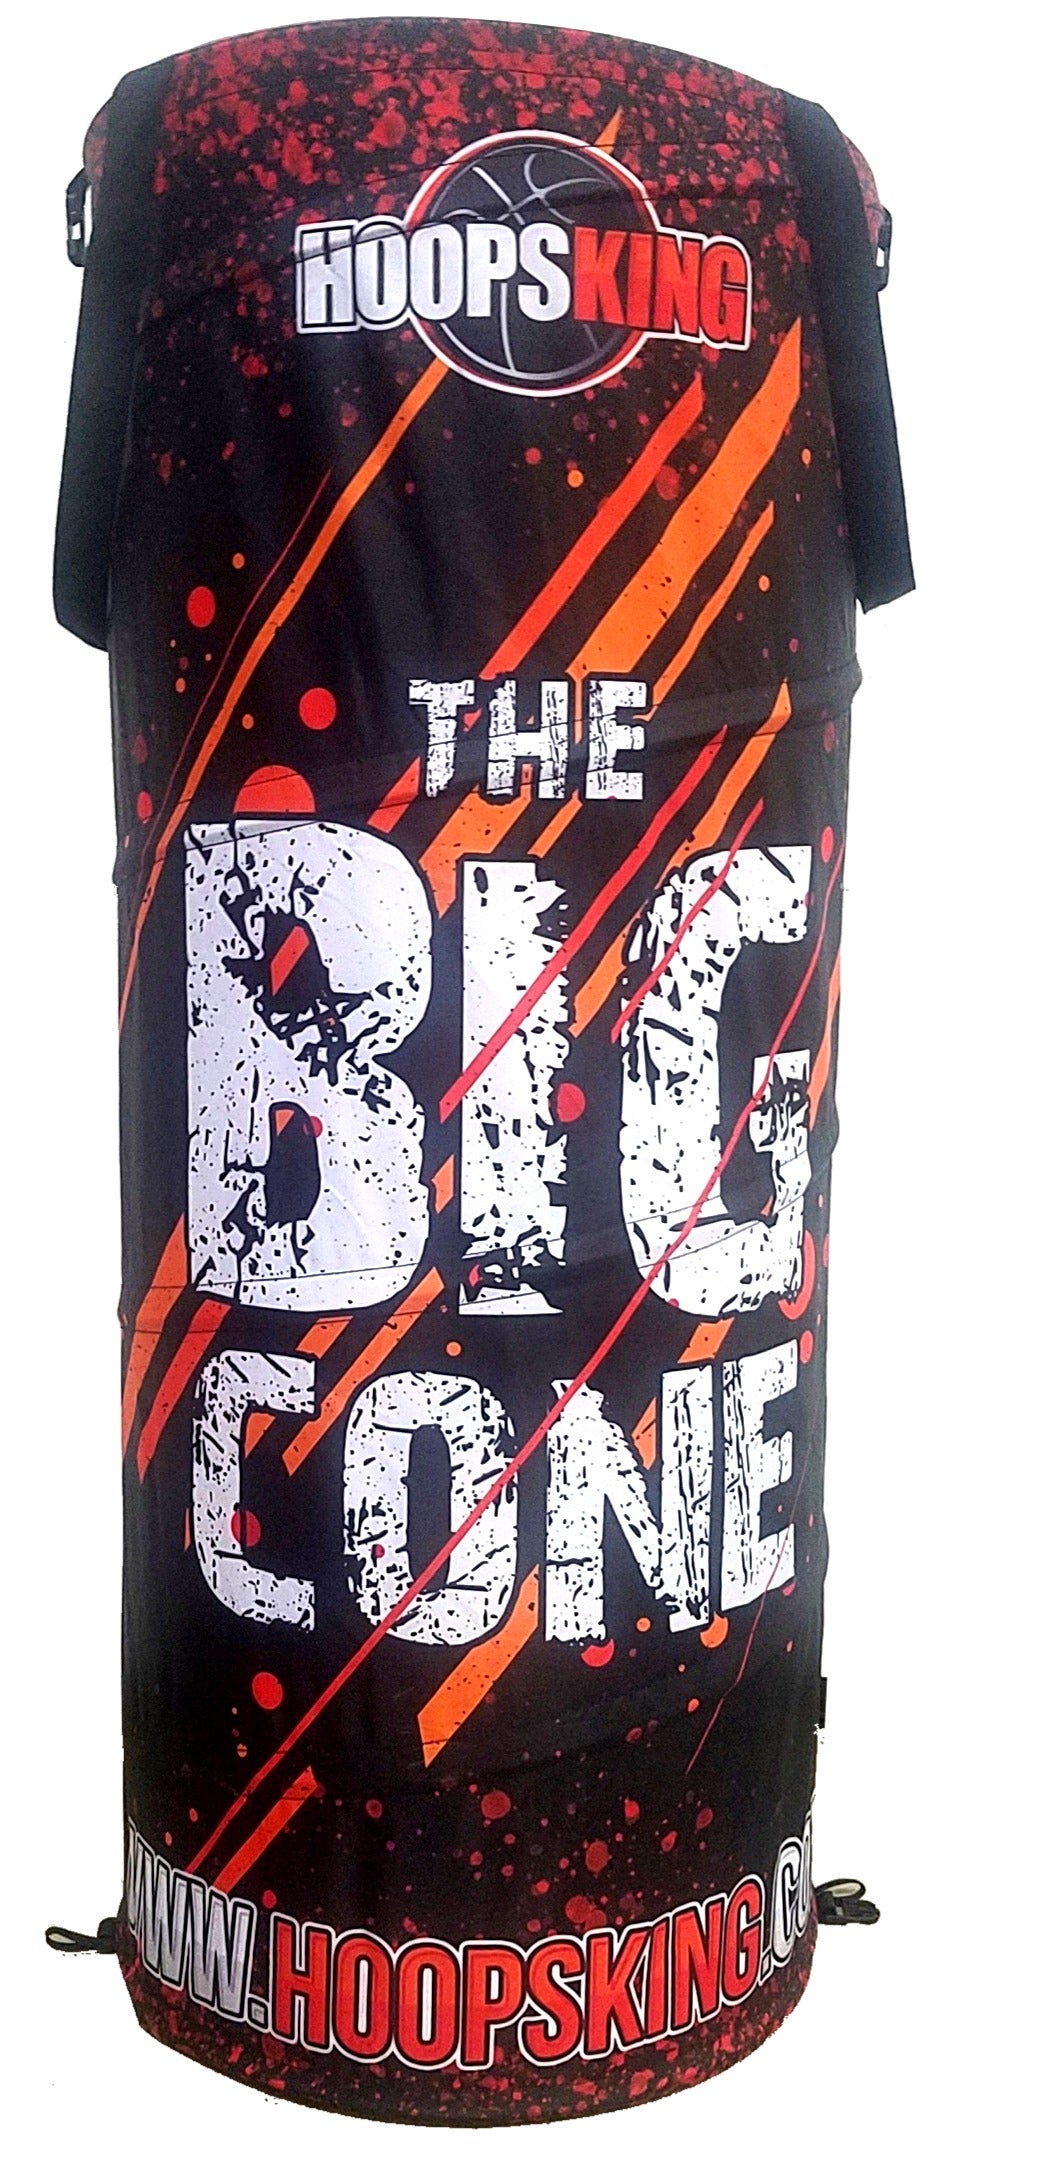 The Big Cone - Cono emergente para defensa deportiva 